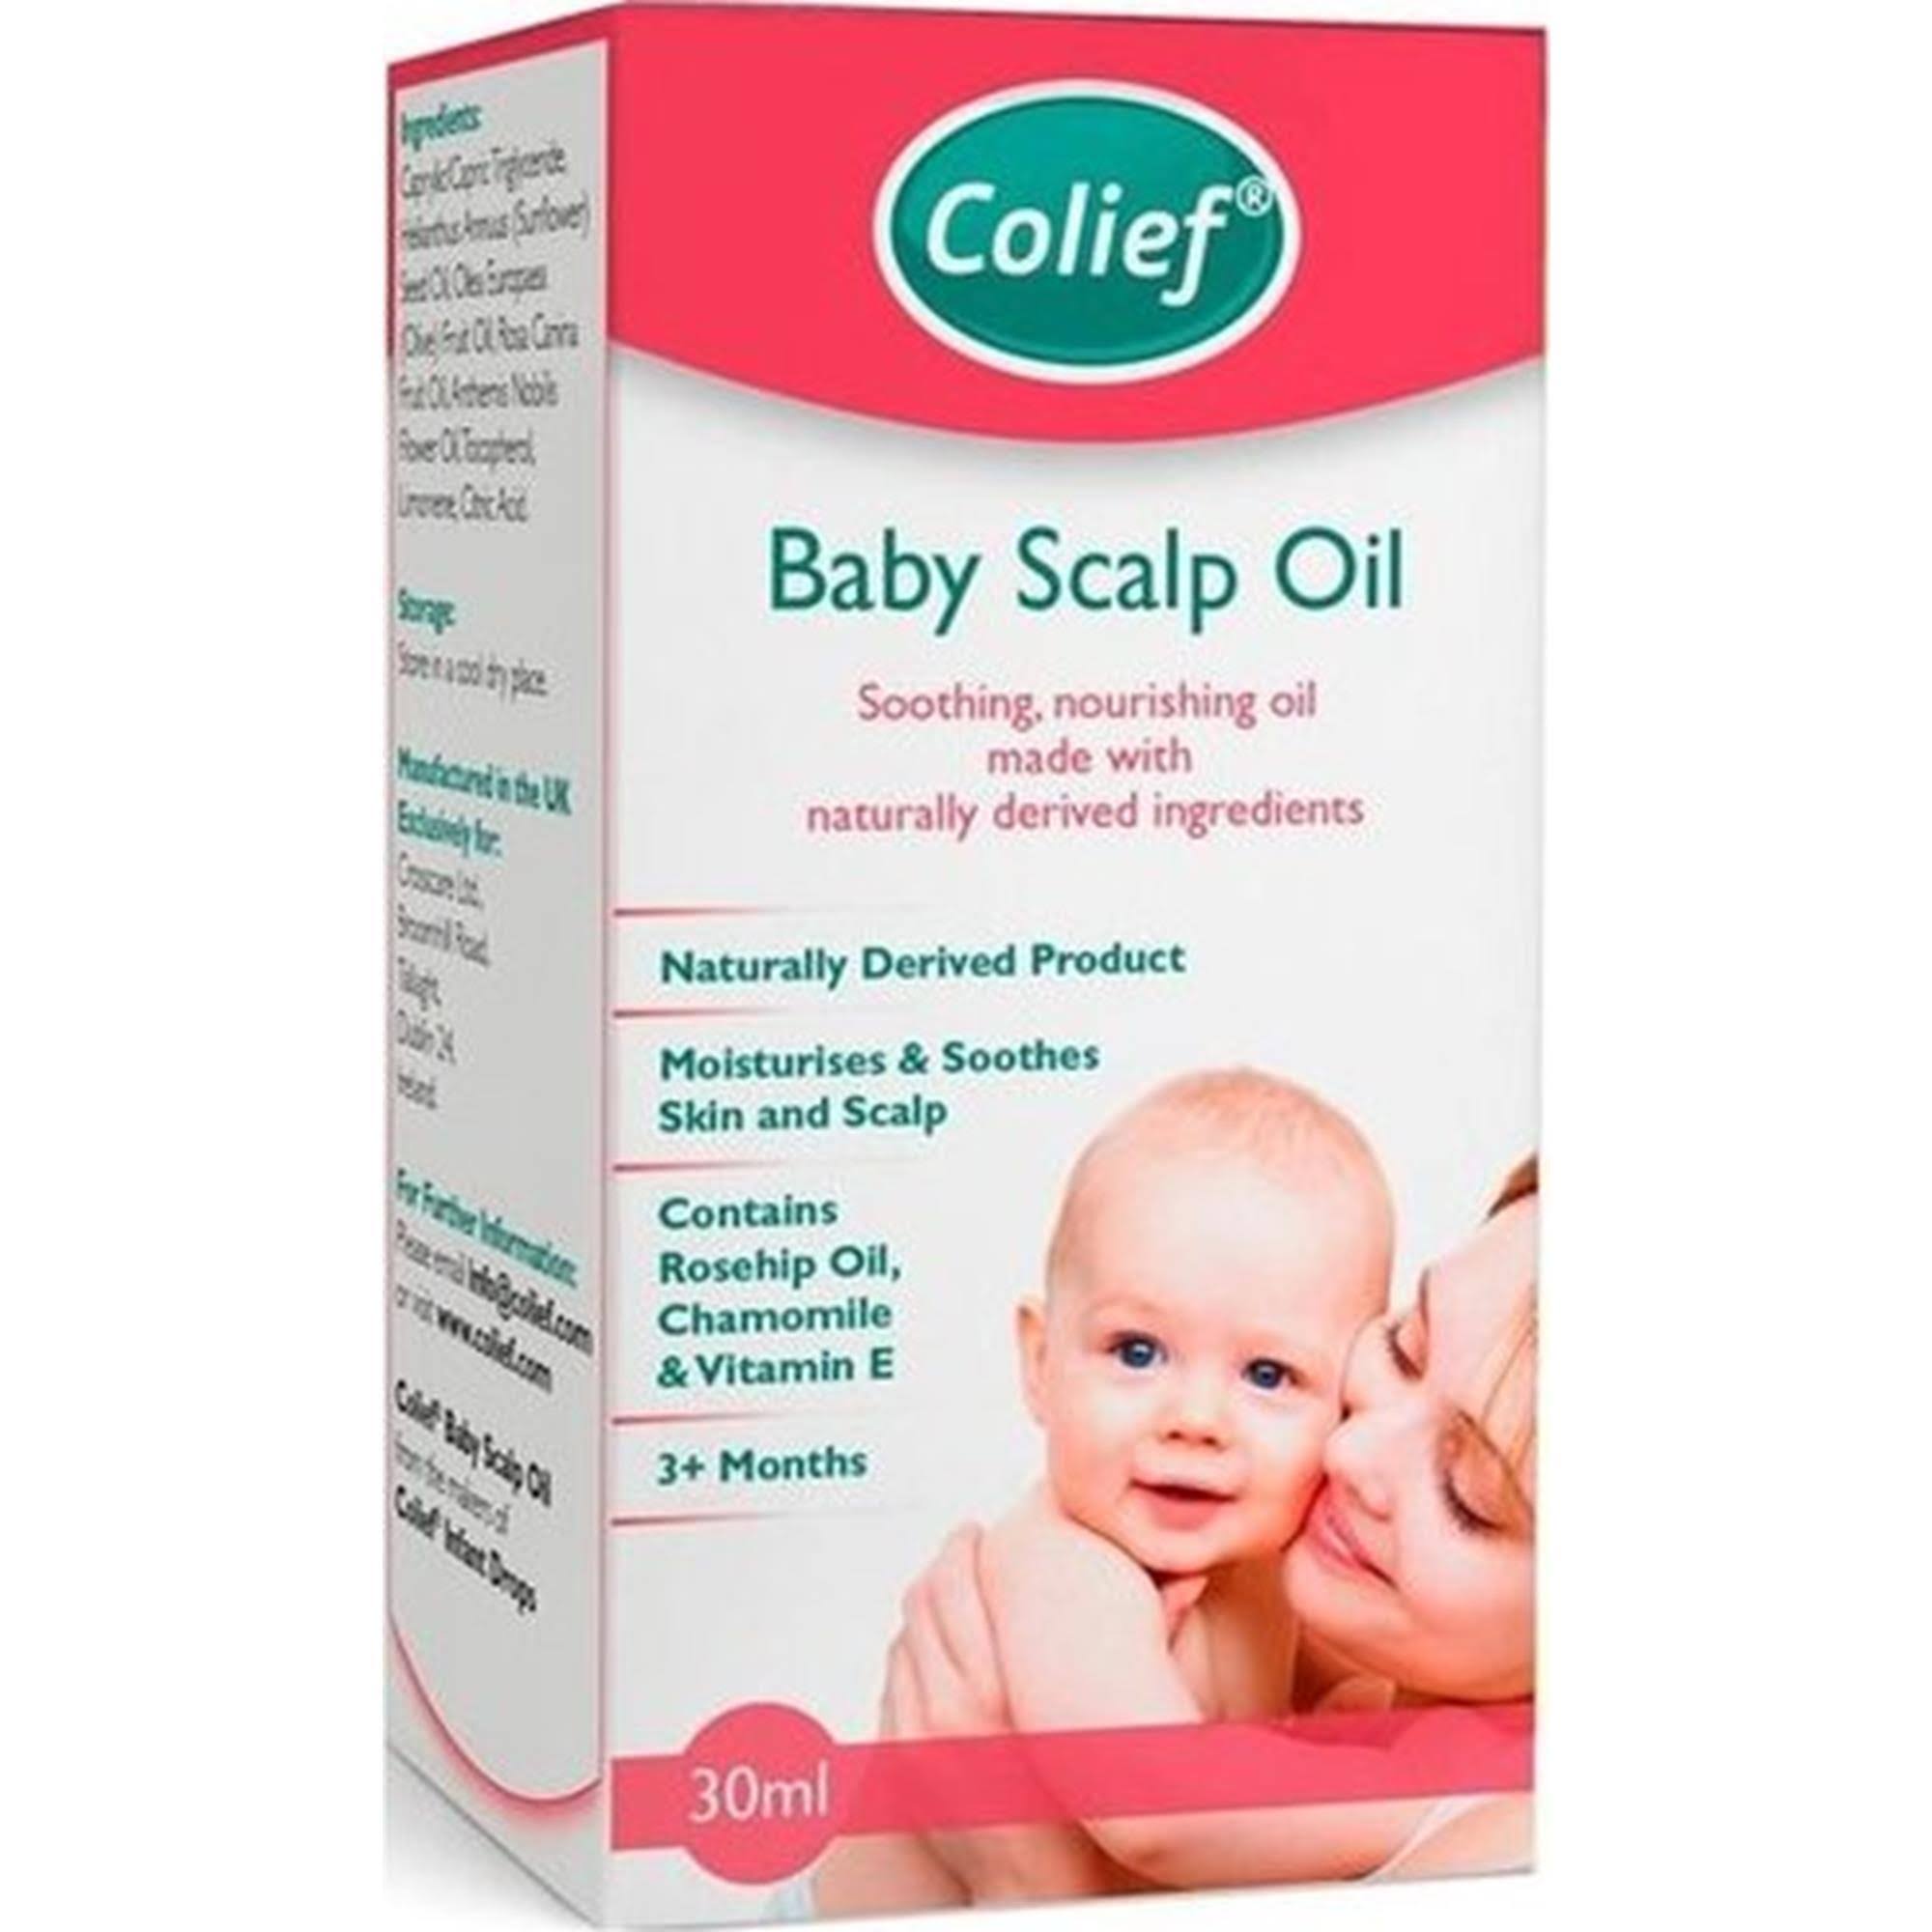 Colief Baby Scalp Oil - 2Plus Months, 30ml